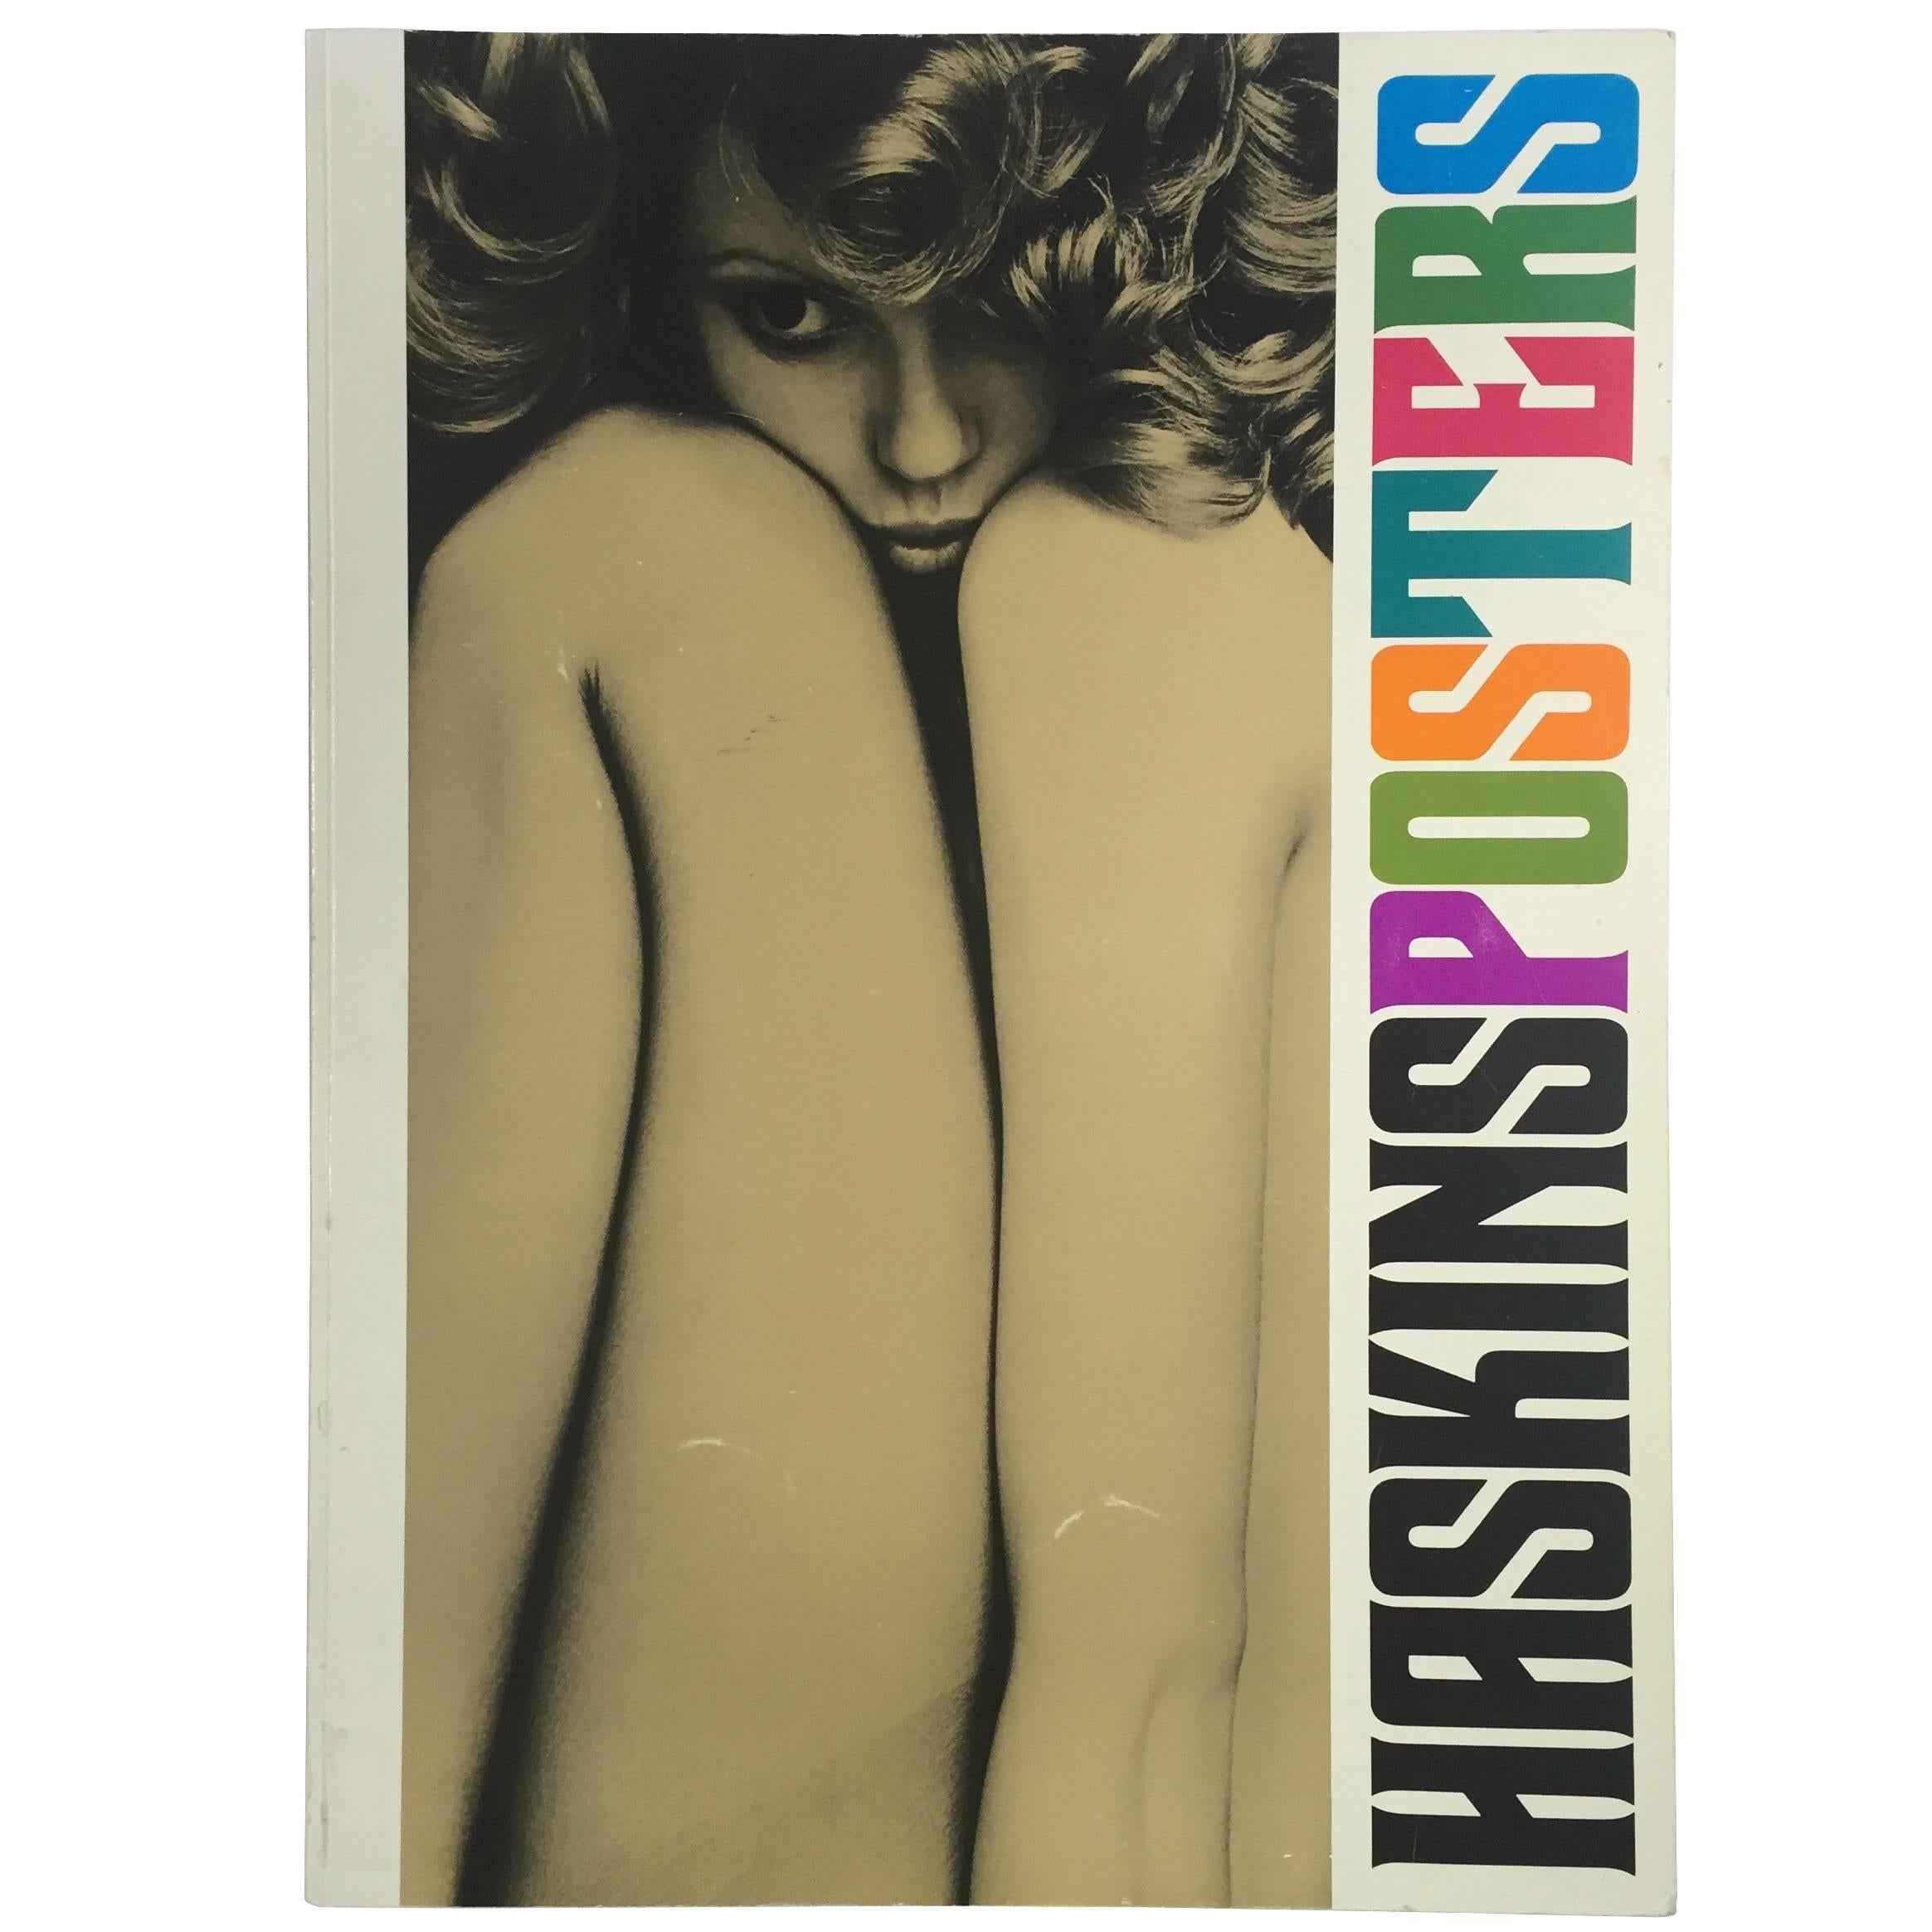 Sam Haskins, "Haskins Posters", 1972